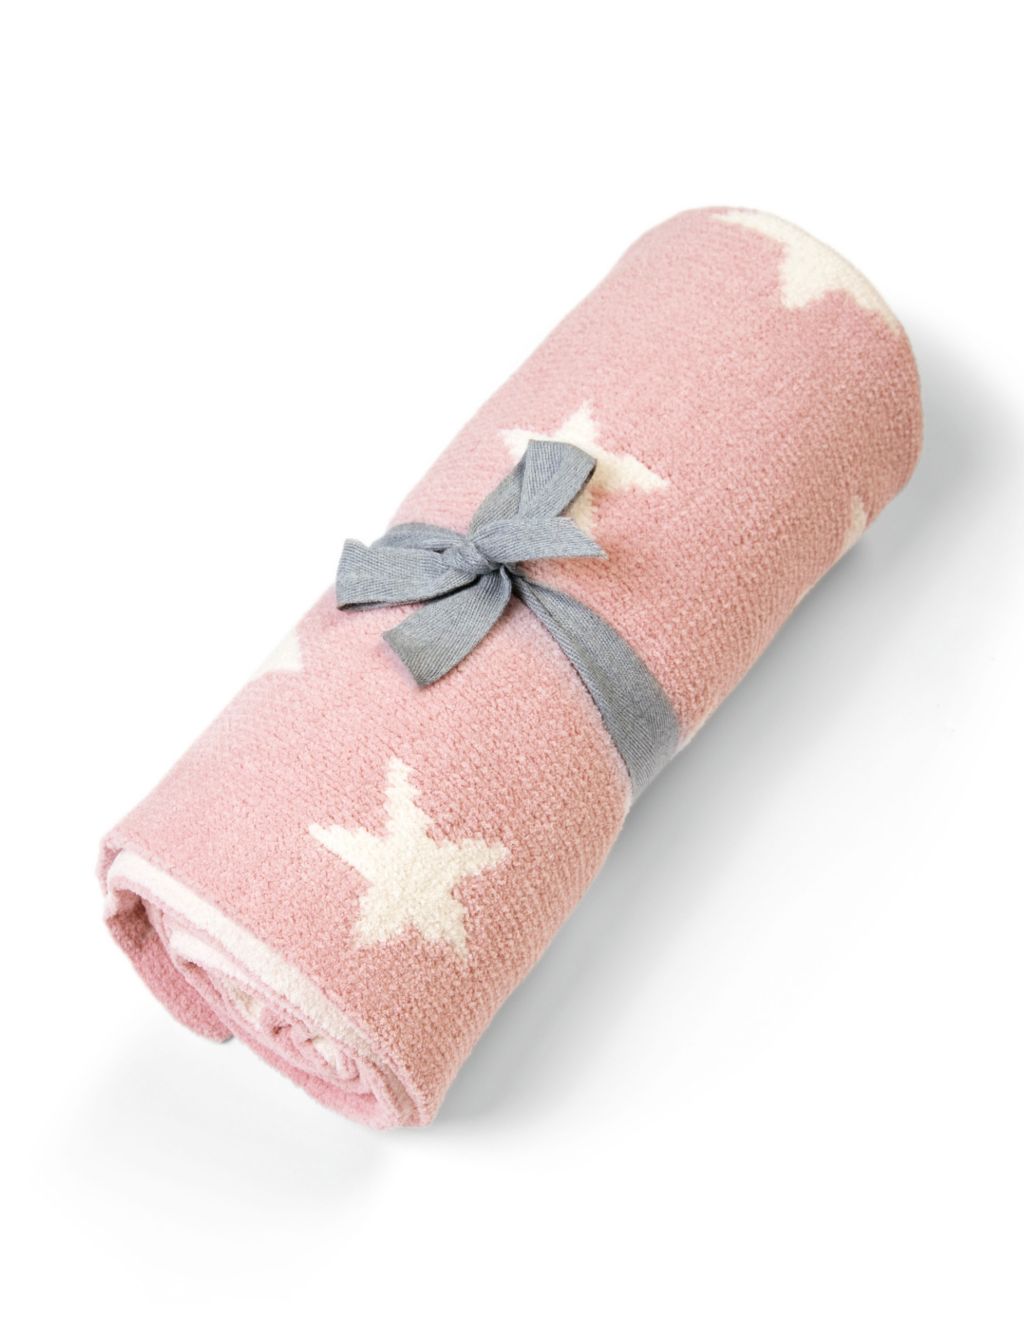 Chenille Blanket - Pink Star image 2